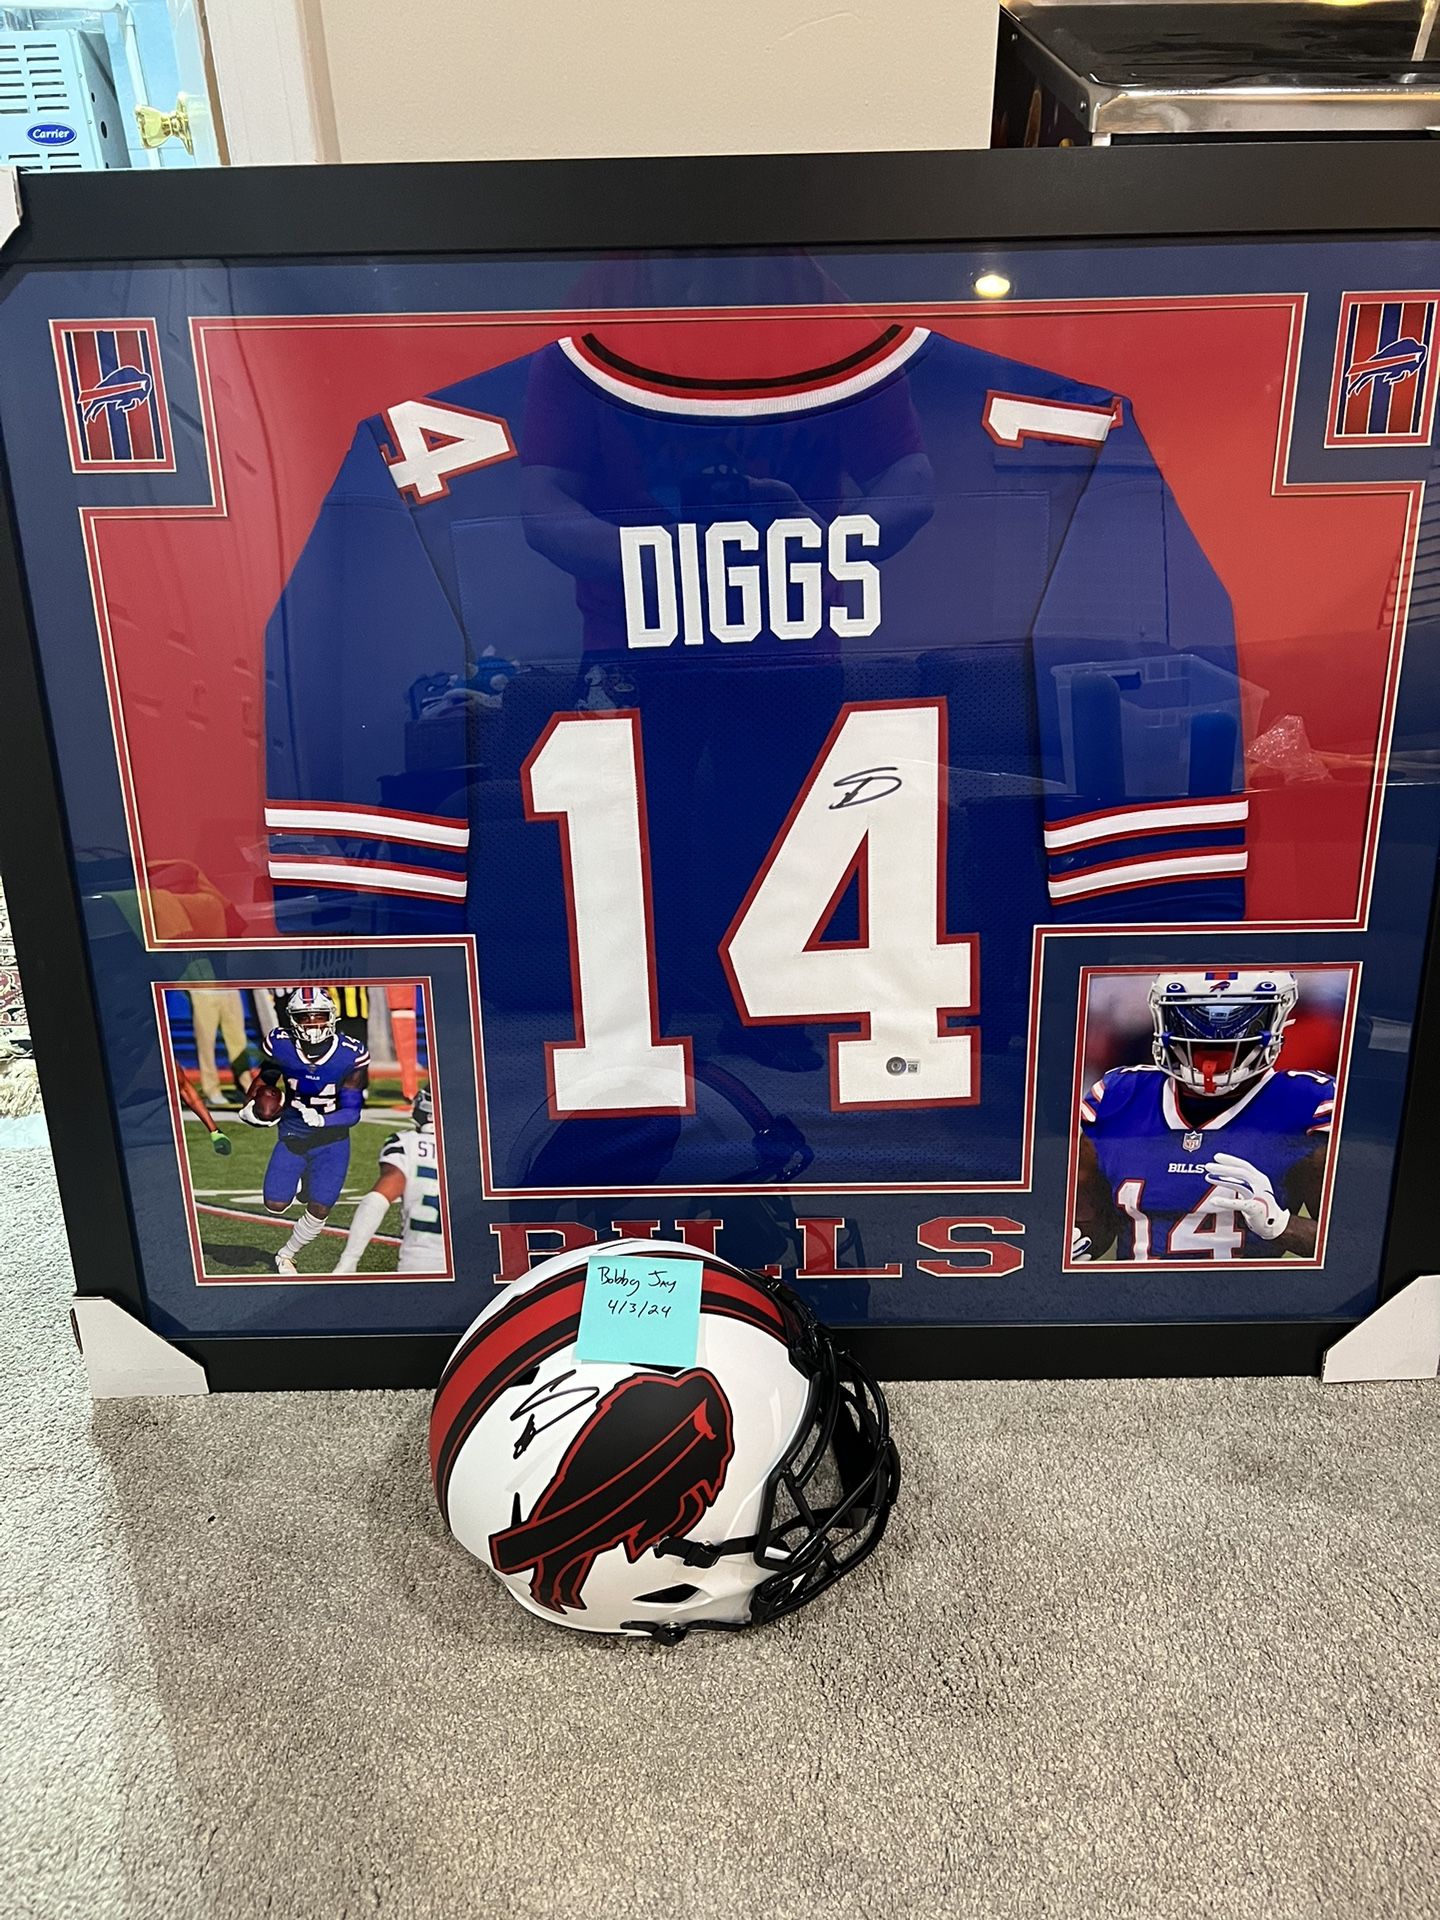 Stefon Stephon Diggs Autograph Auto Signed Memorabilia Jersey Helmet Lot Bundle NFL Football